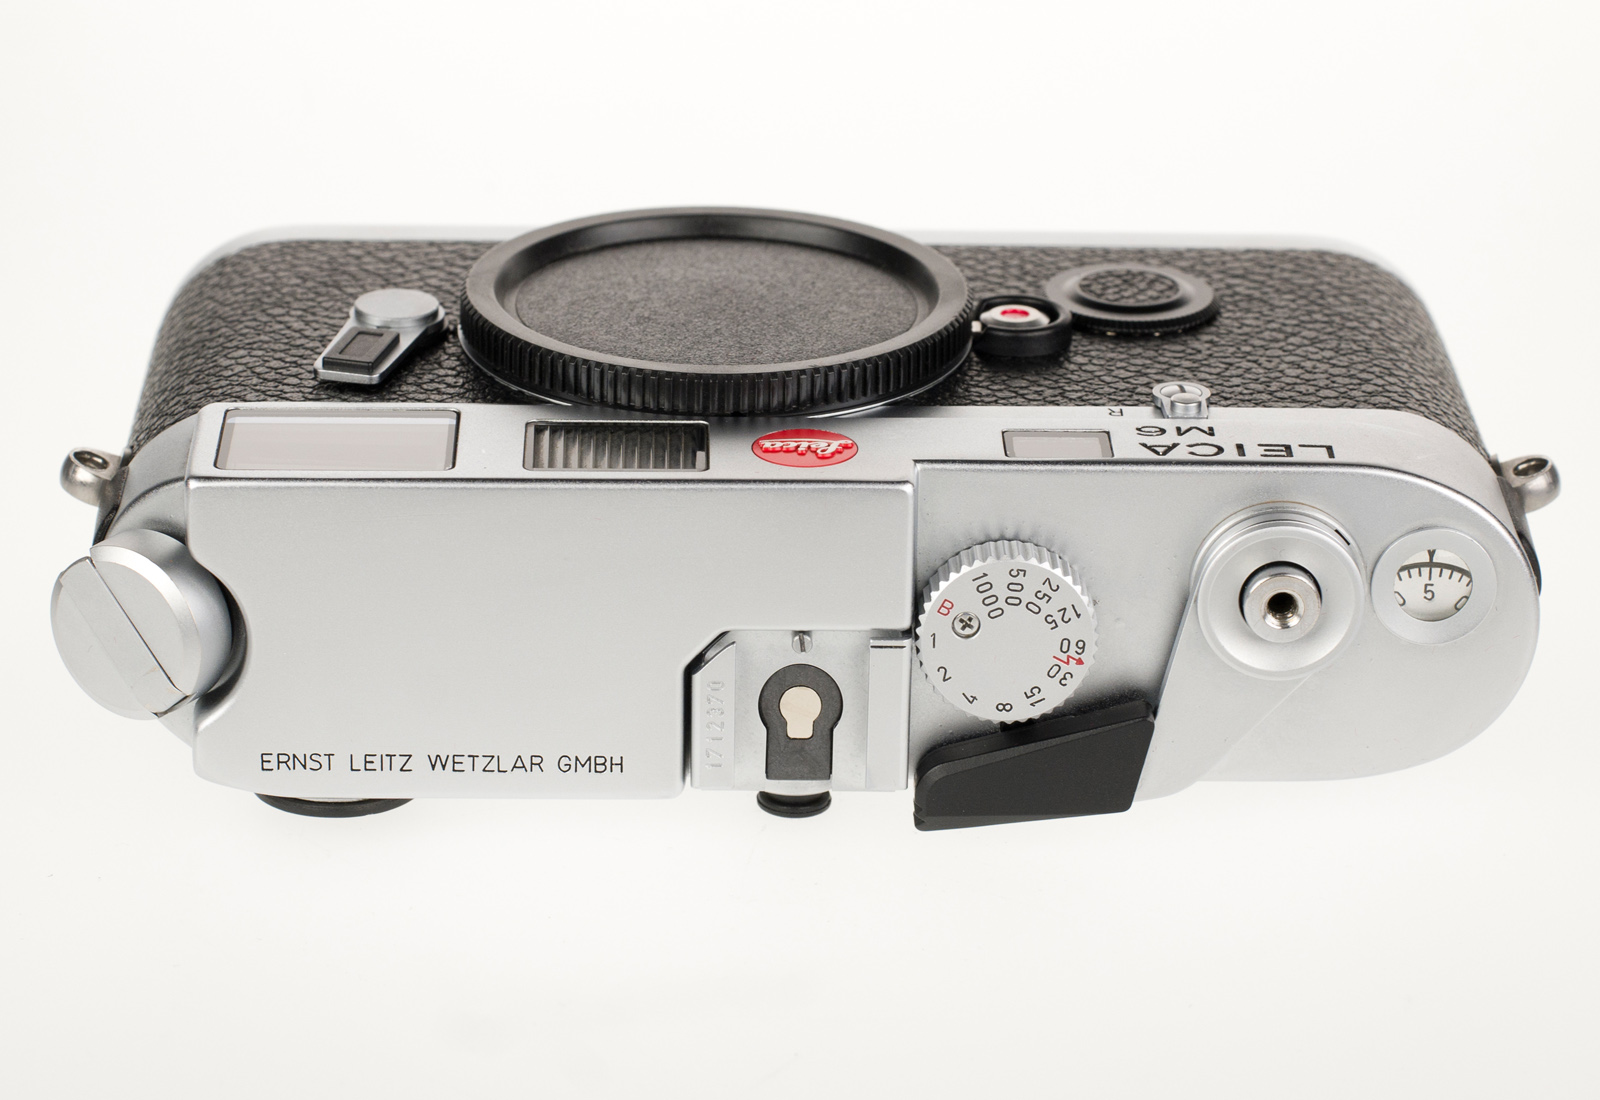 Leica M6, silbern verchromt CLA